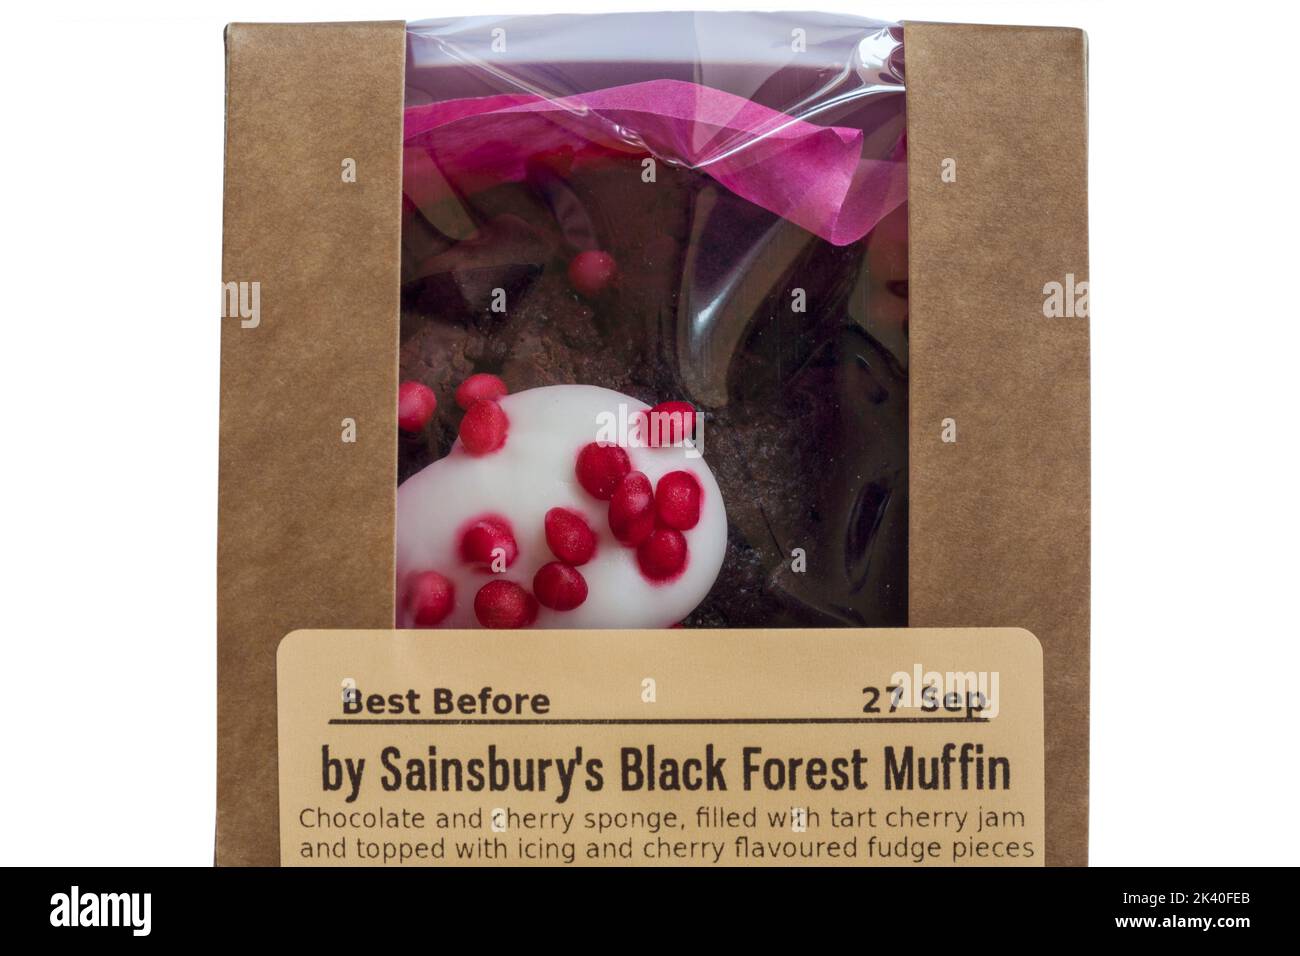 Black Forest Muffin by Sainsbury's from Sainsbury's boulangerie en magasin dans une boîte sur fond blanc Banque D'Images